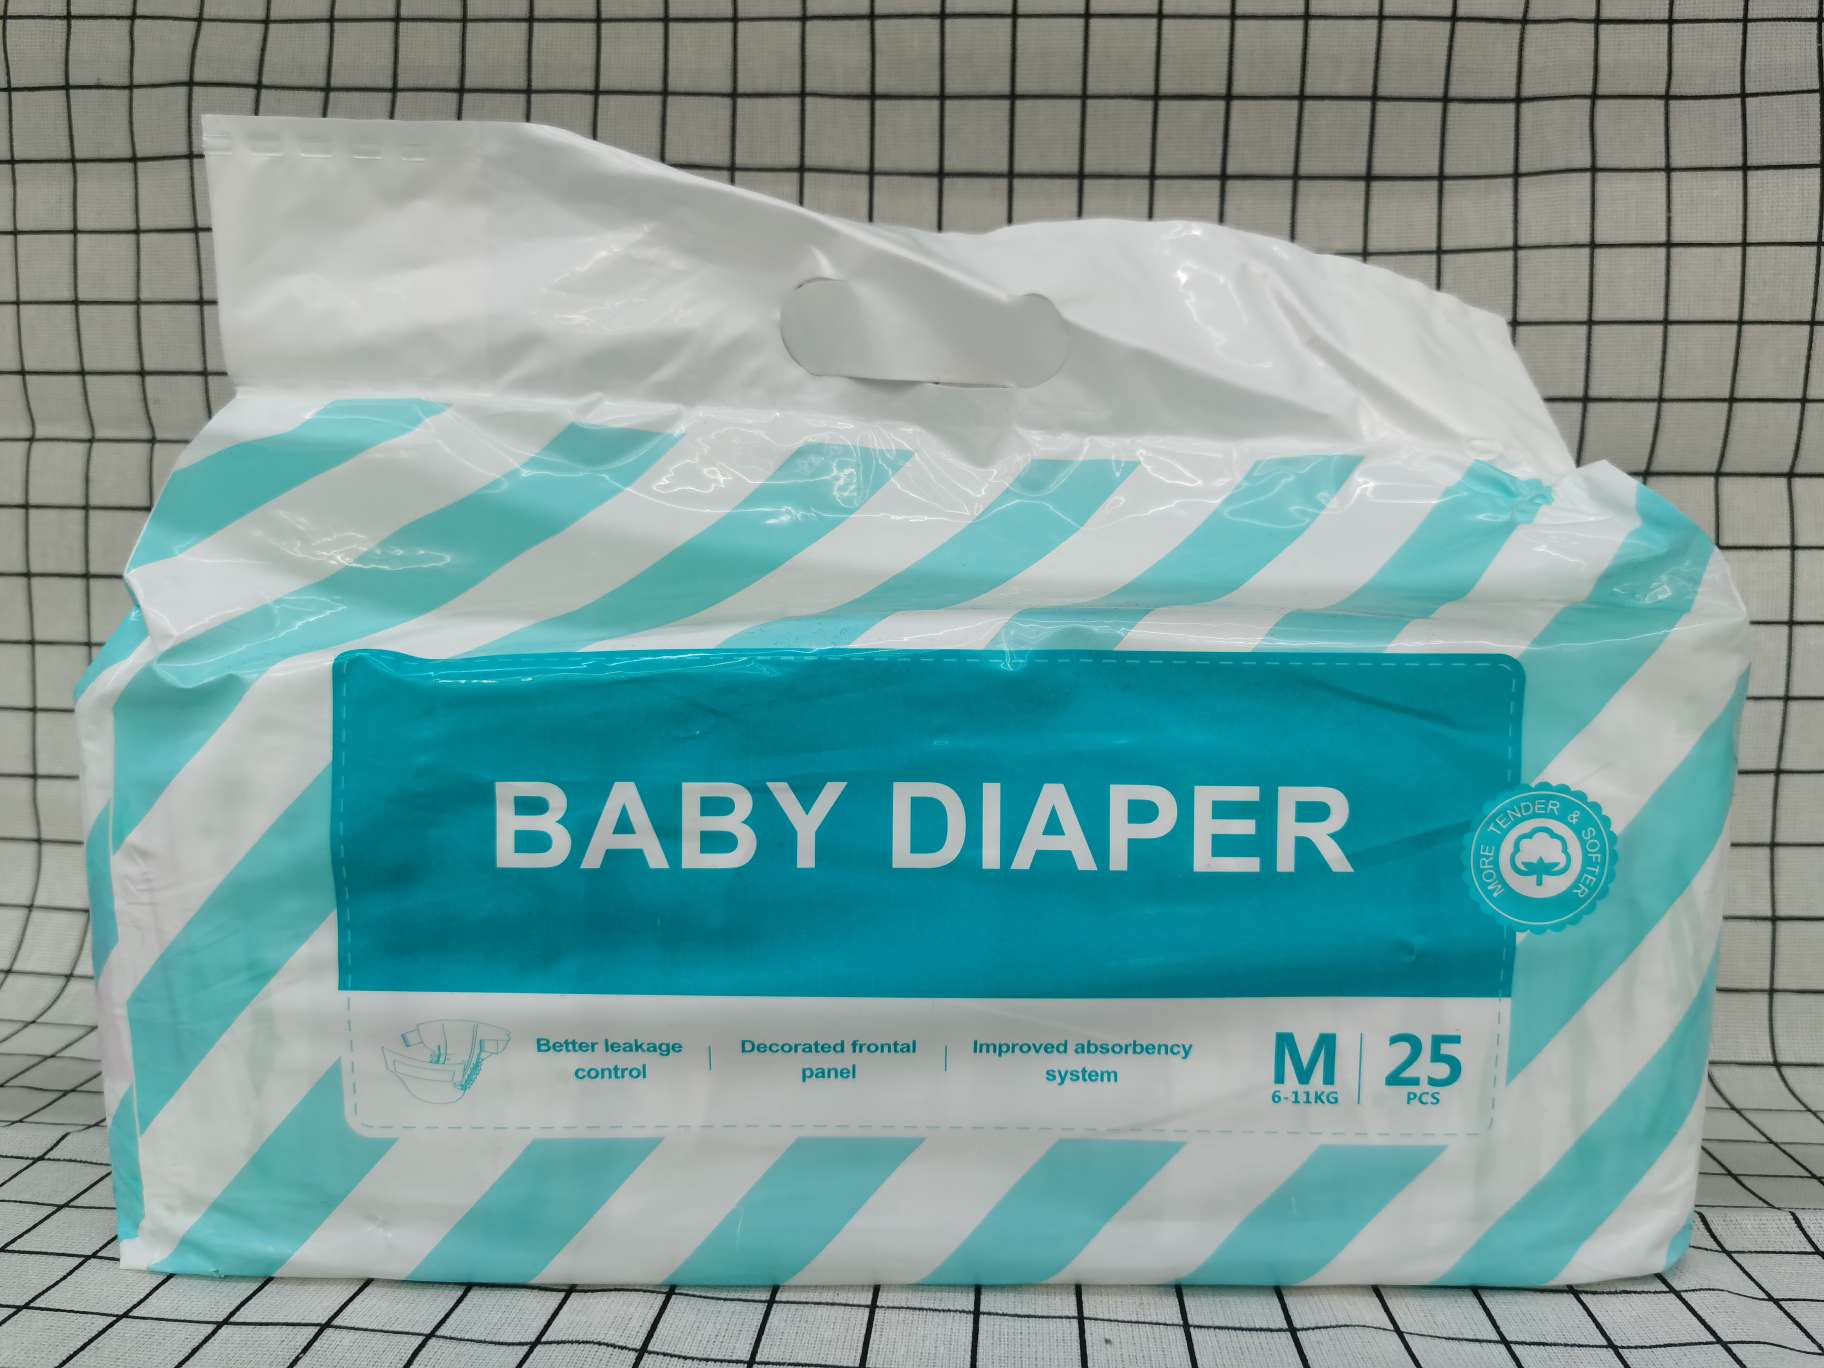 baby diaper: M: 25 pcs
电联订做详情图1